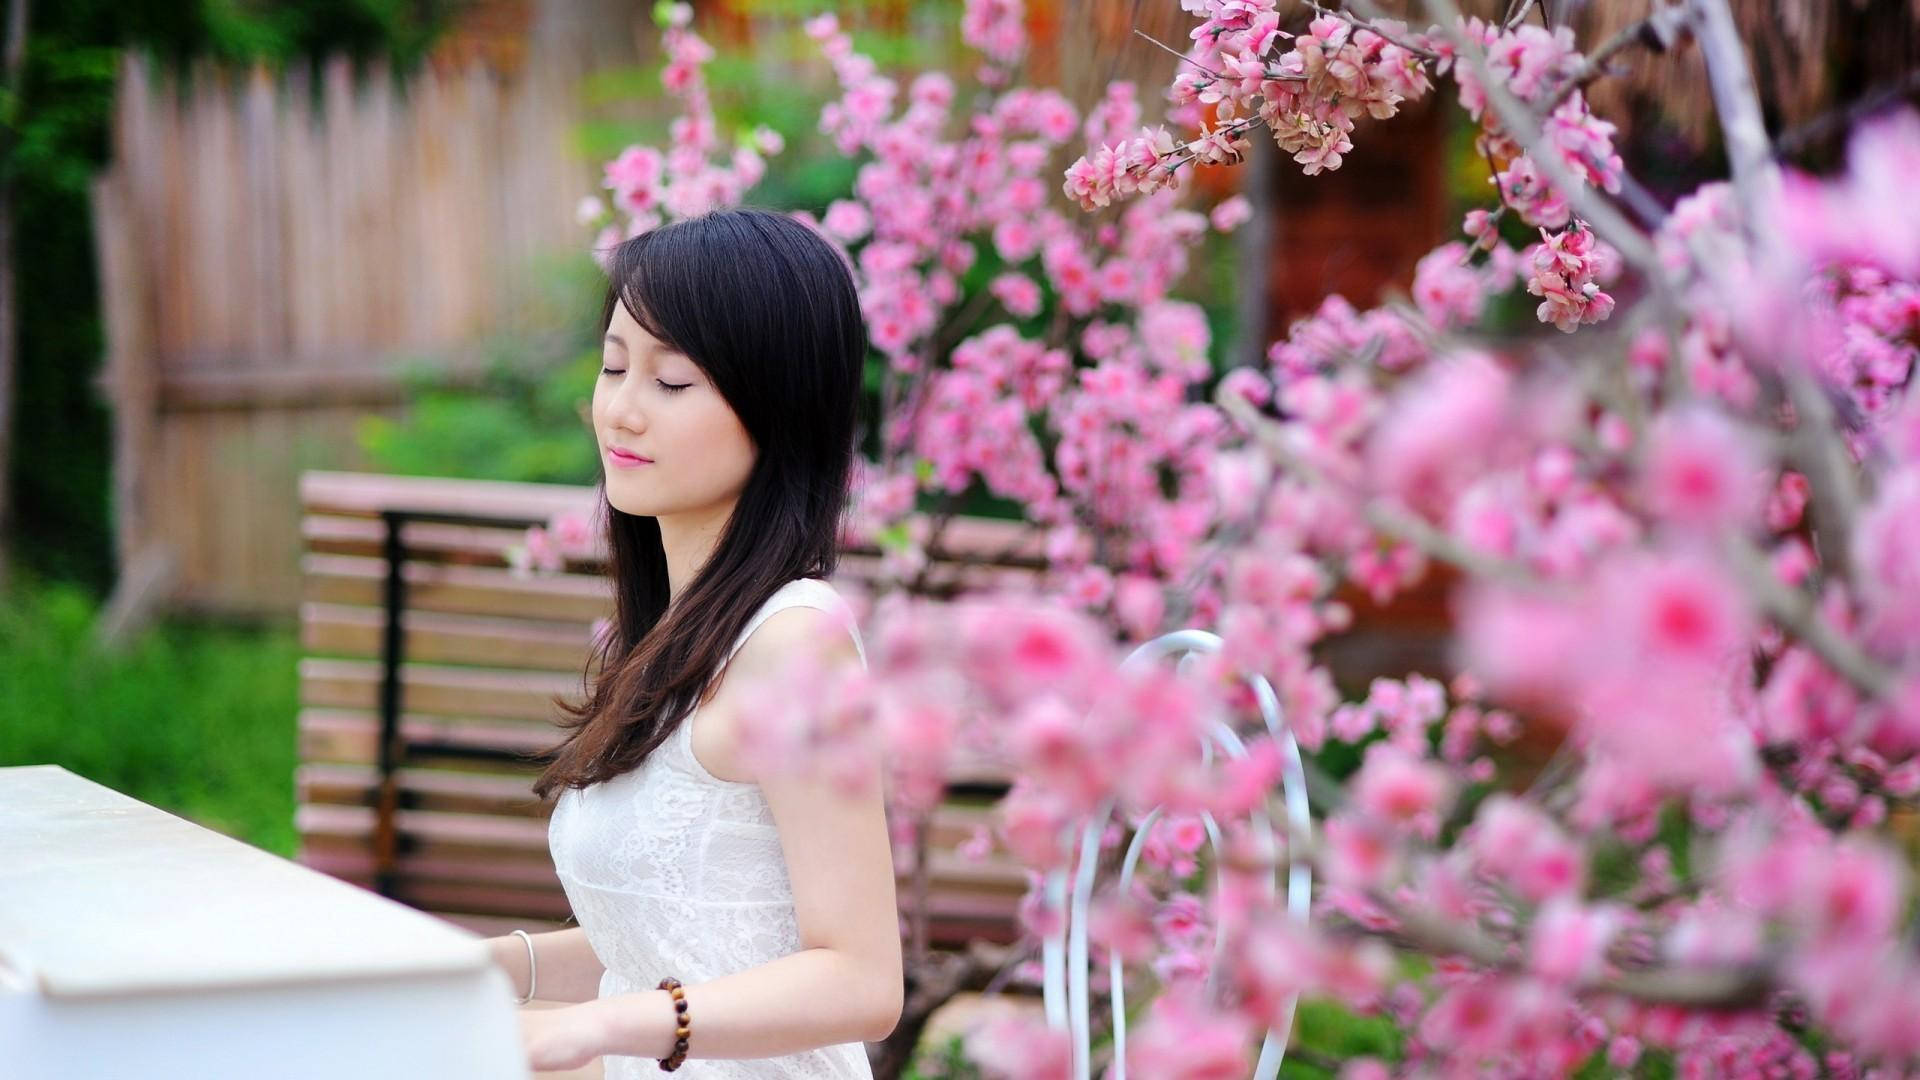 Download Japan Girl Playing Piano Pink Garden Flowers Wallpaper | Wallpapers .com